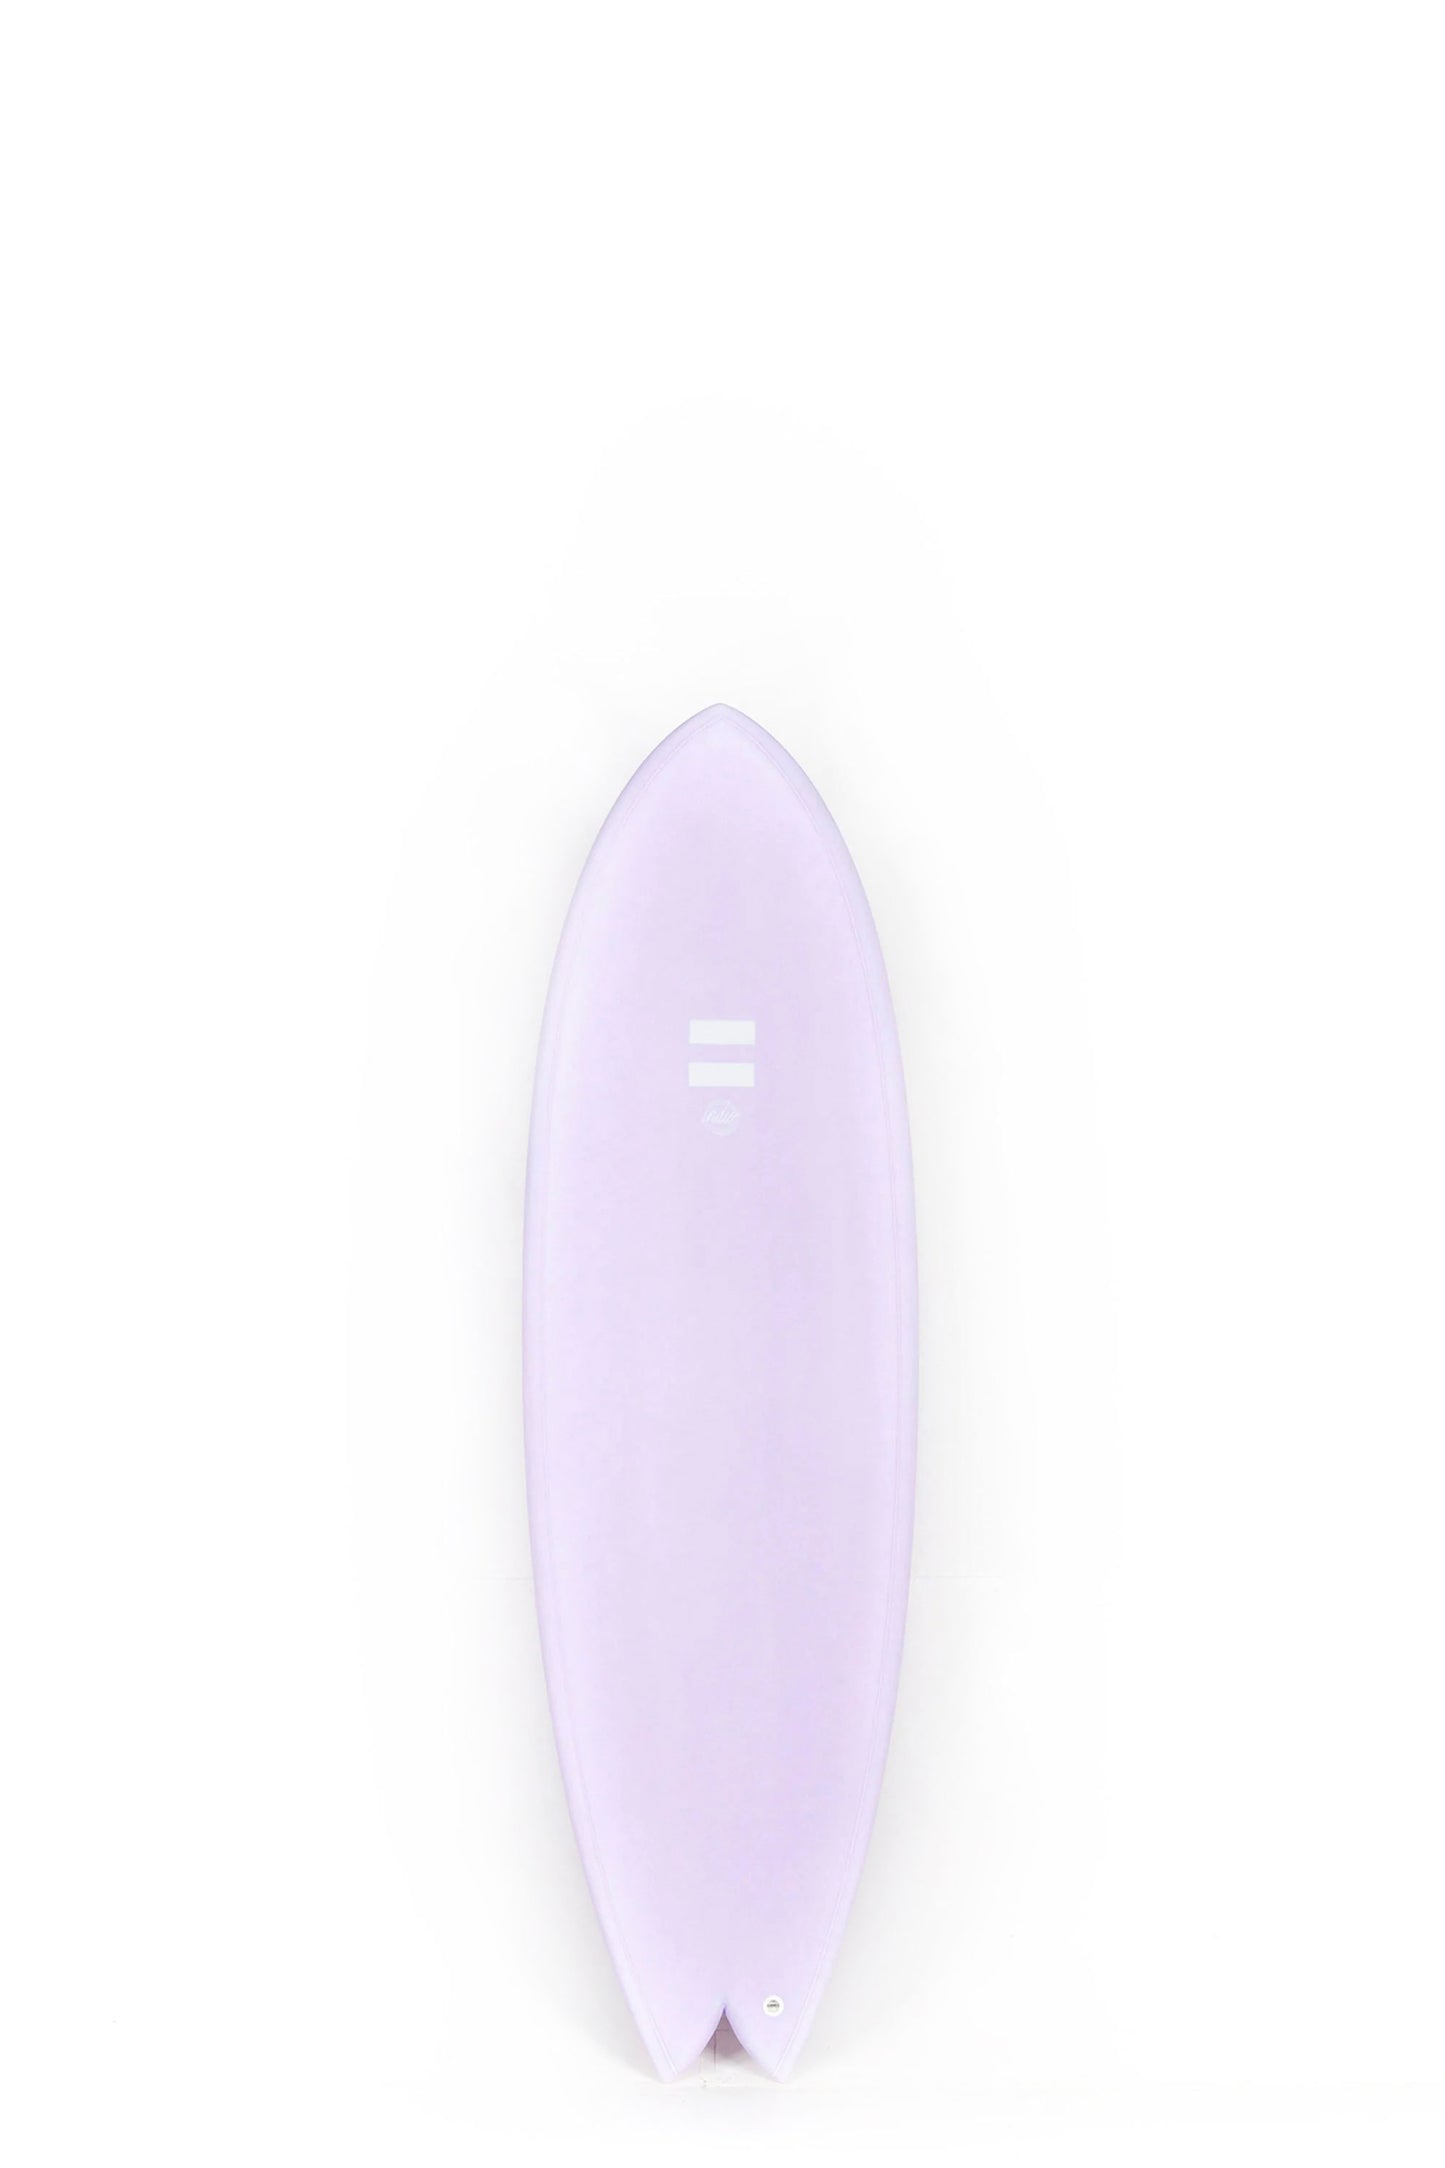 Indio Surfboards - COMBO Purple - 5'10" x 20 1/2 x 2 1/2 x 35,4L.